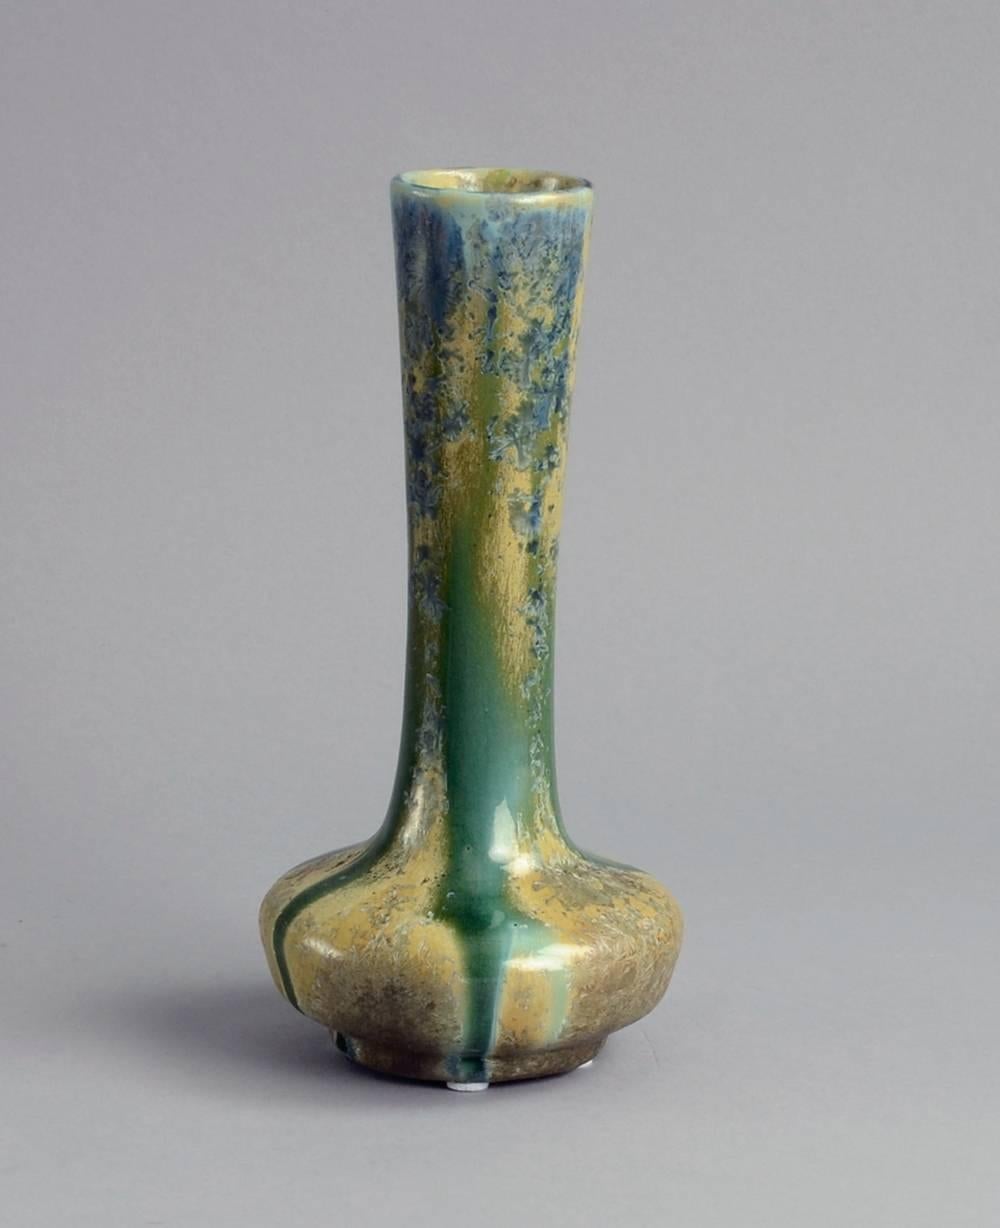 Glazed Art Nouveau Stoneware Vase with Dripping Glaze by Pierrefonds, France For Sale